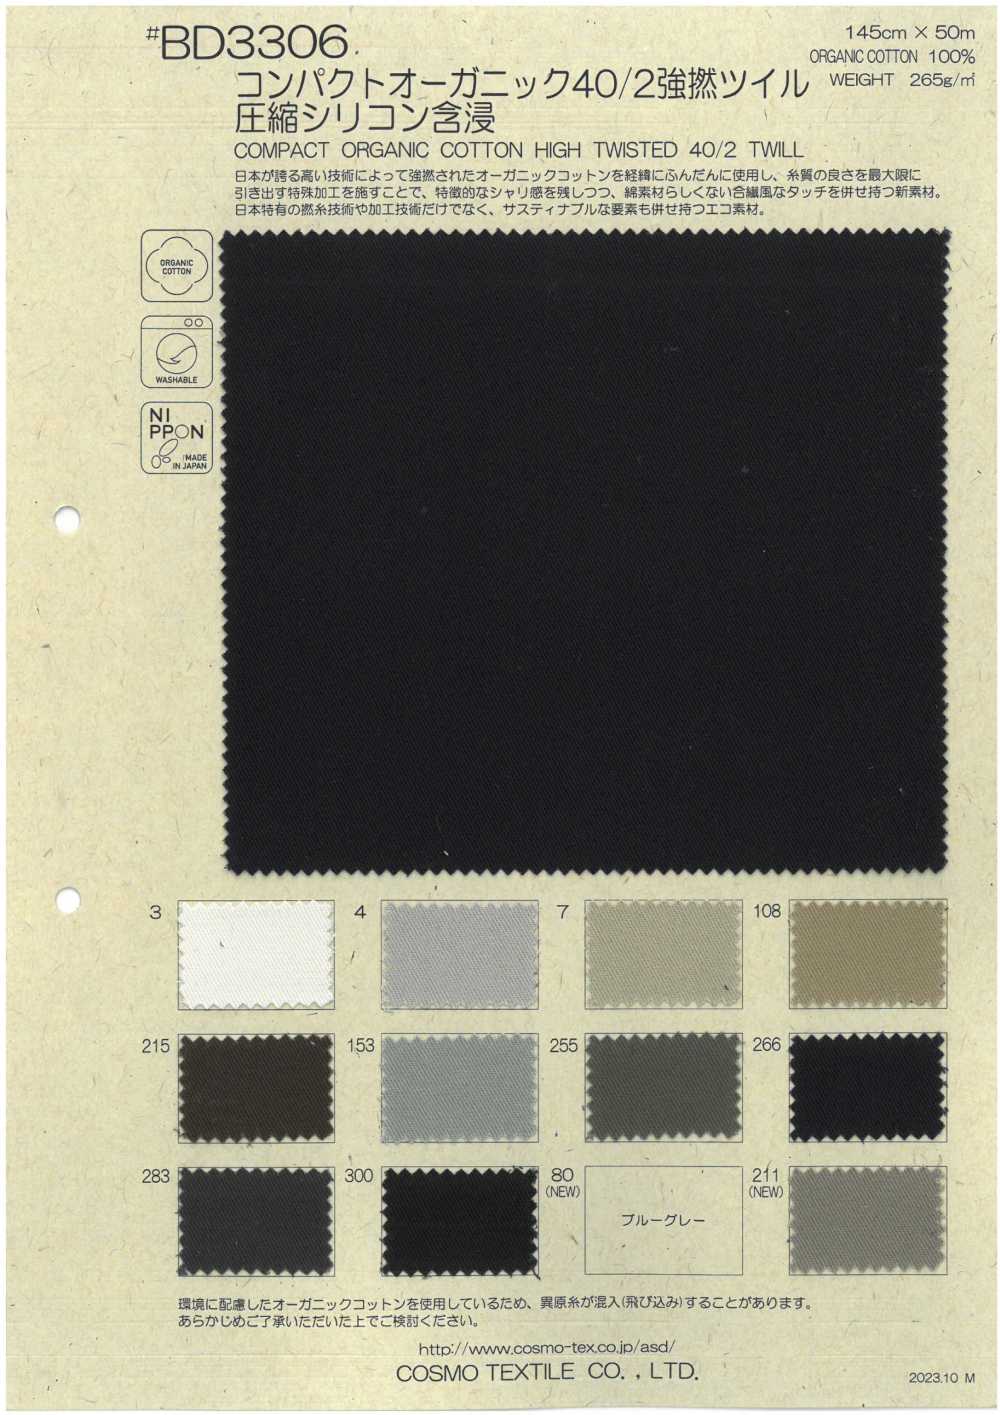 BD3306 緊湊型有機棉 40/2 高捻斜紋壓縮矽膠含浸加工[面料] Cosmo Textile 日本